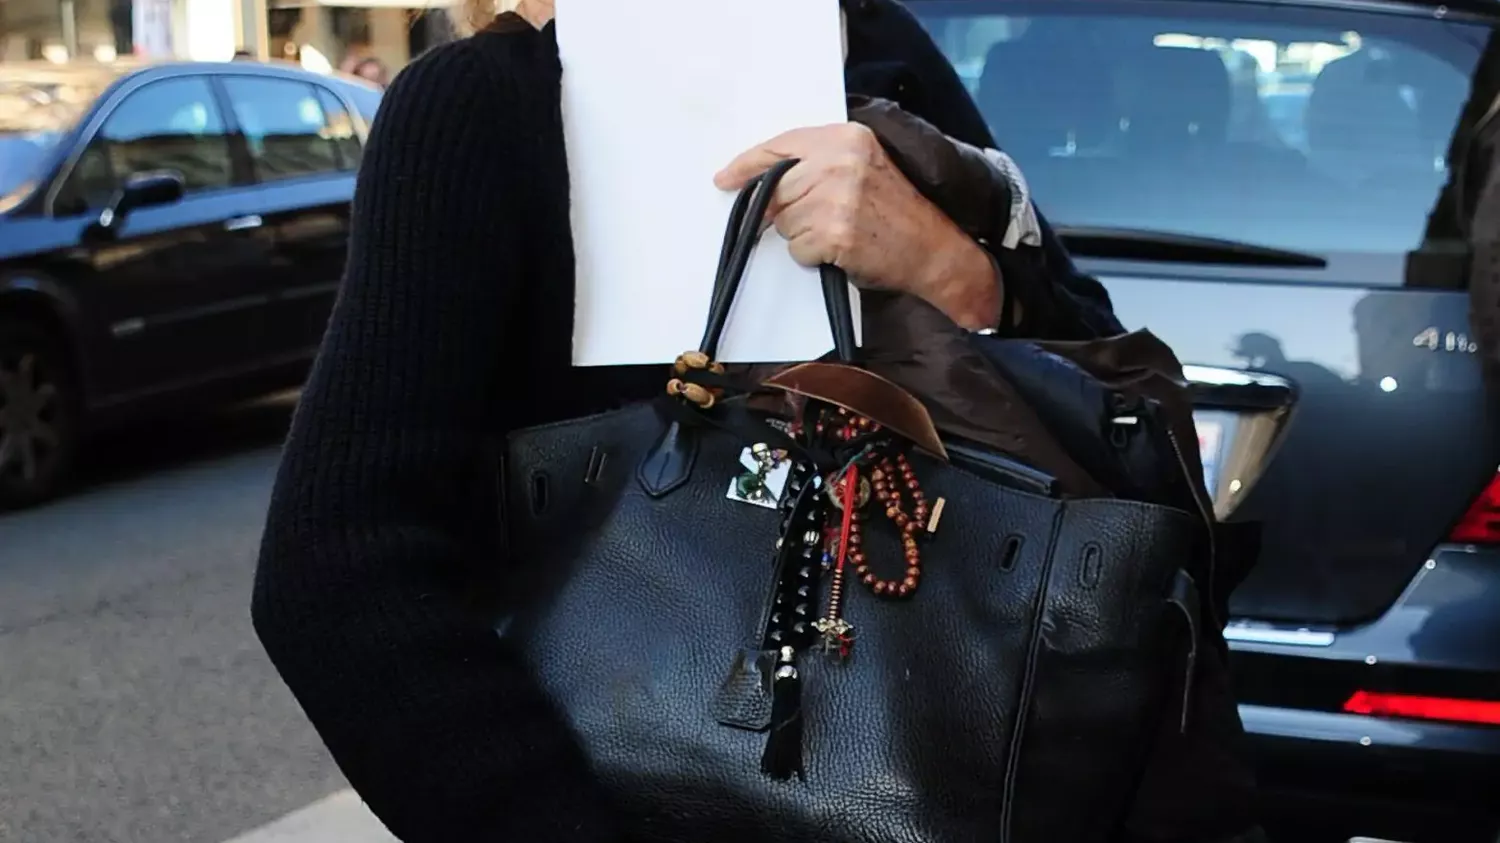 Did Jane Birkin Design the Birkin Bag? Her Royalties & Inspiration